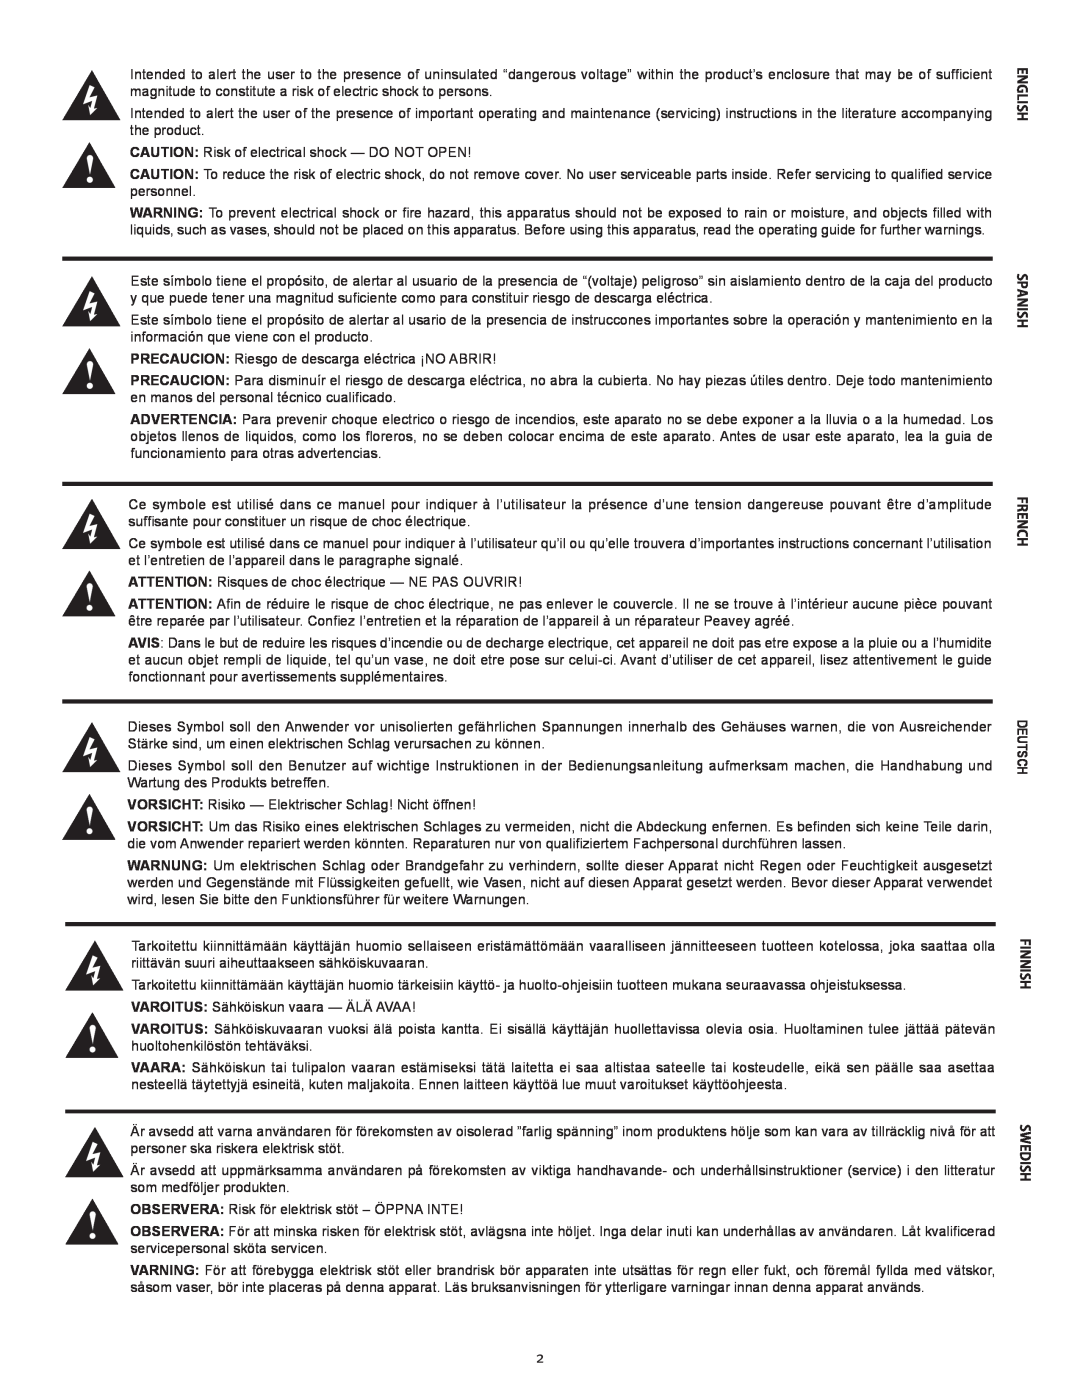 Peavey IPR 4500 manual CAUTION Risk of electrical shock - DO NOT OPEN, PRECAUCION Riesgo de descarga eléctrica ¡NO ABRIR 